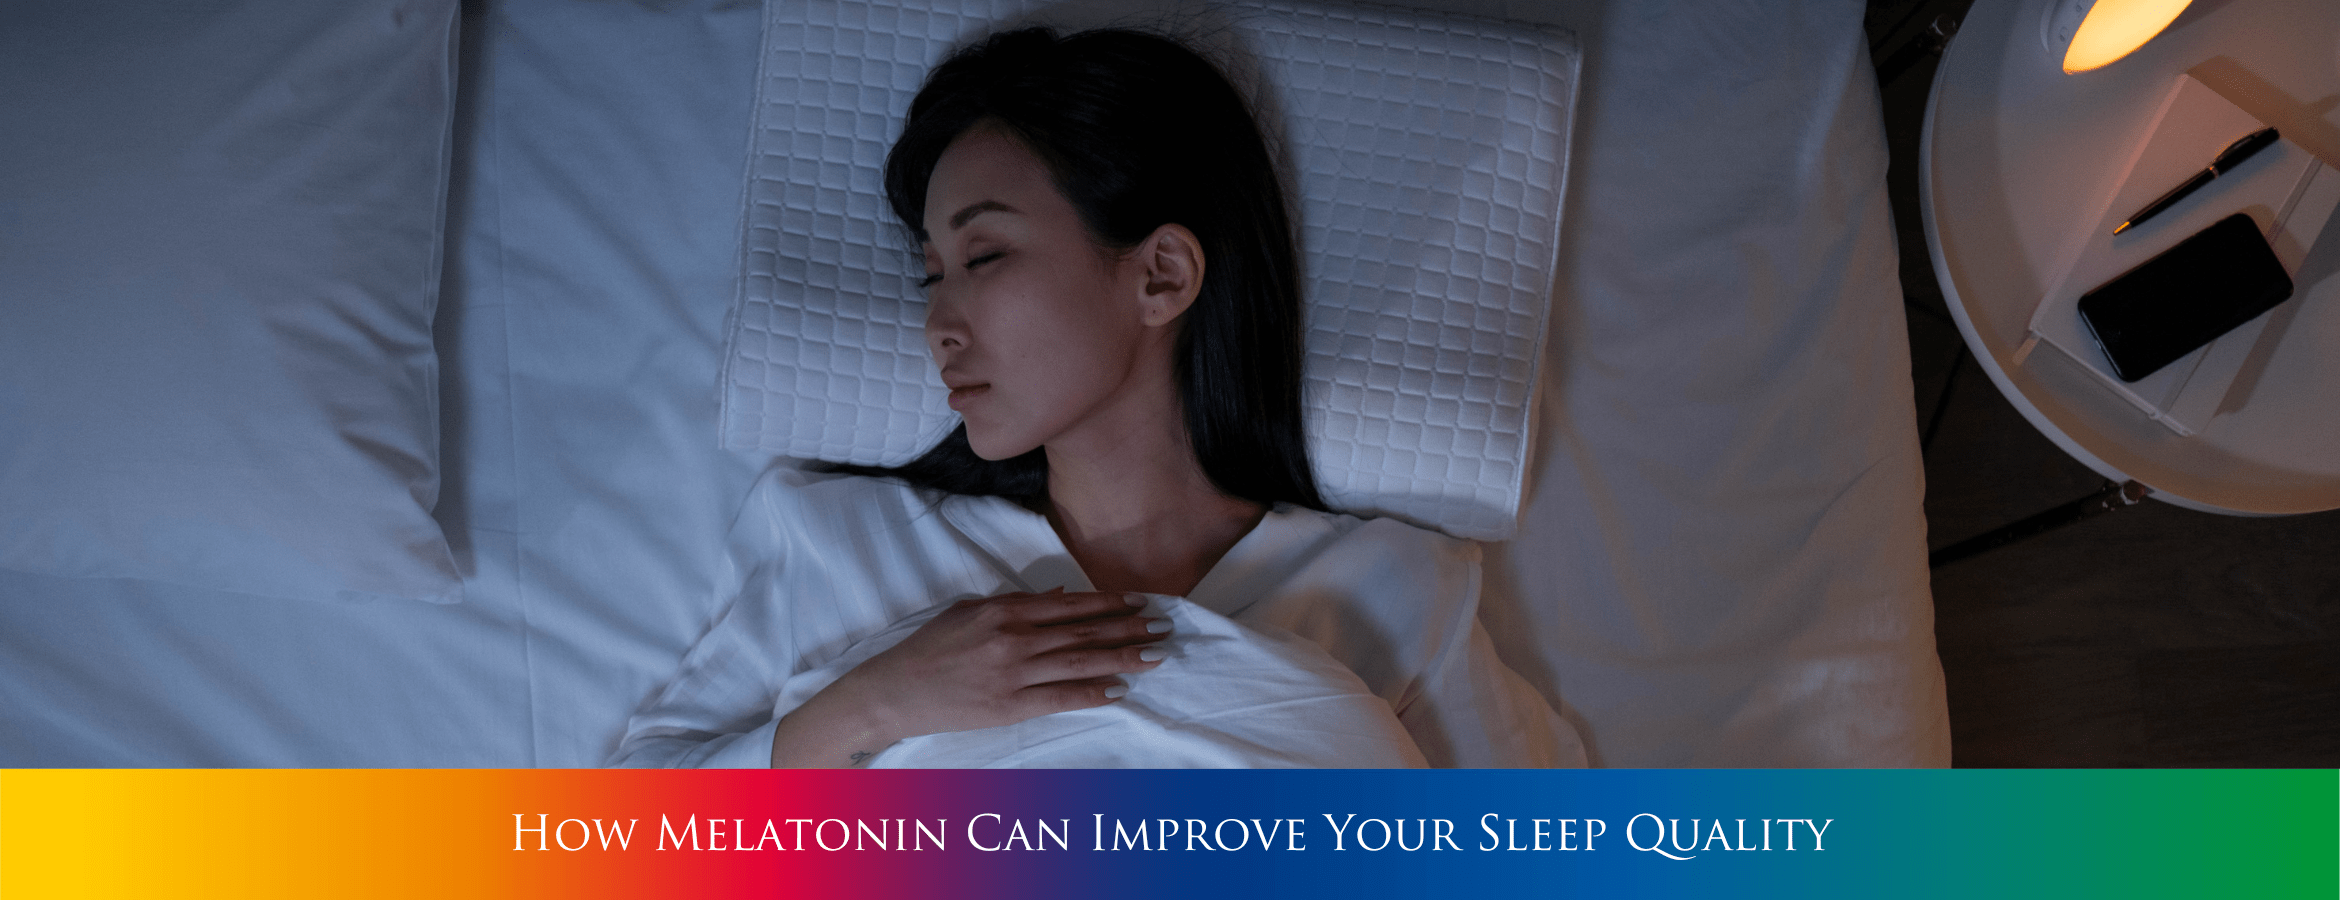 How Melatonin Can Improve Your Sleep Quality